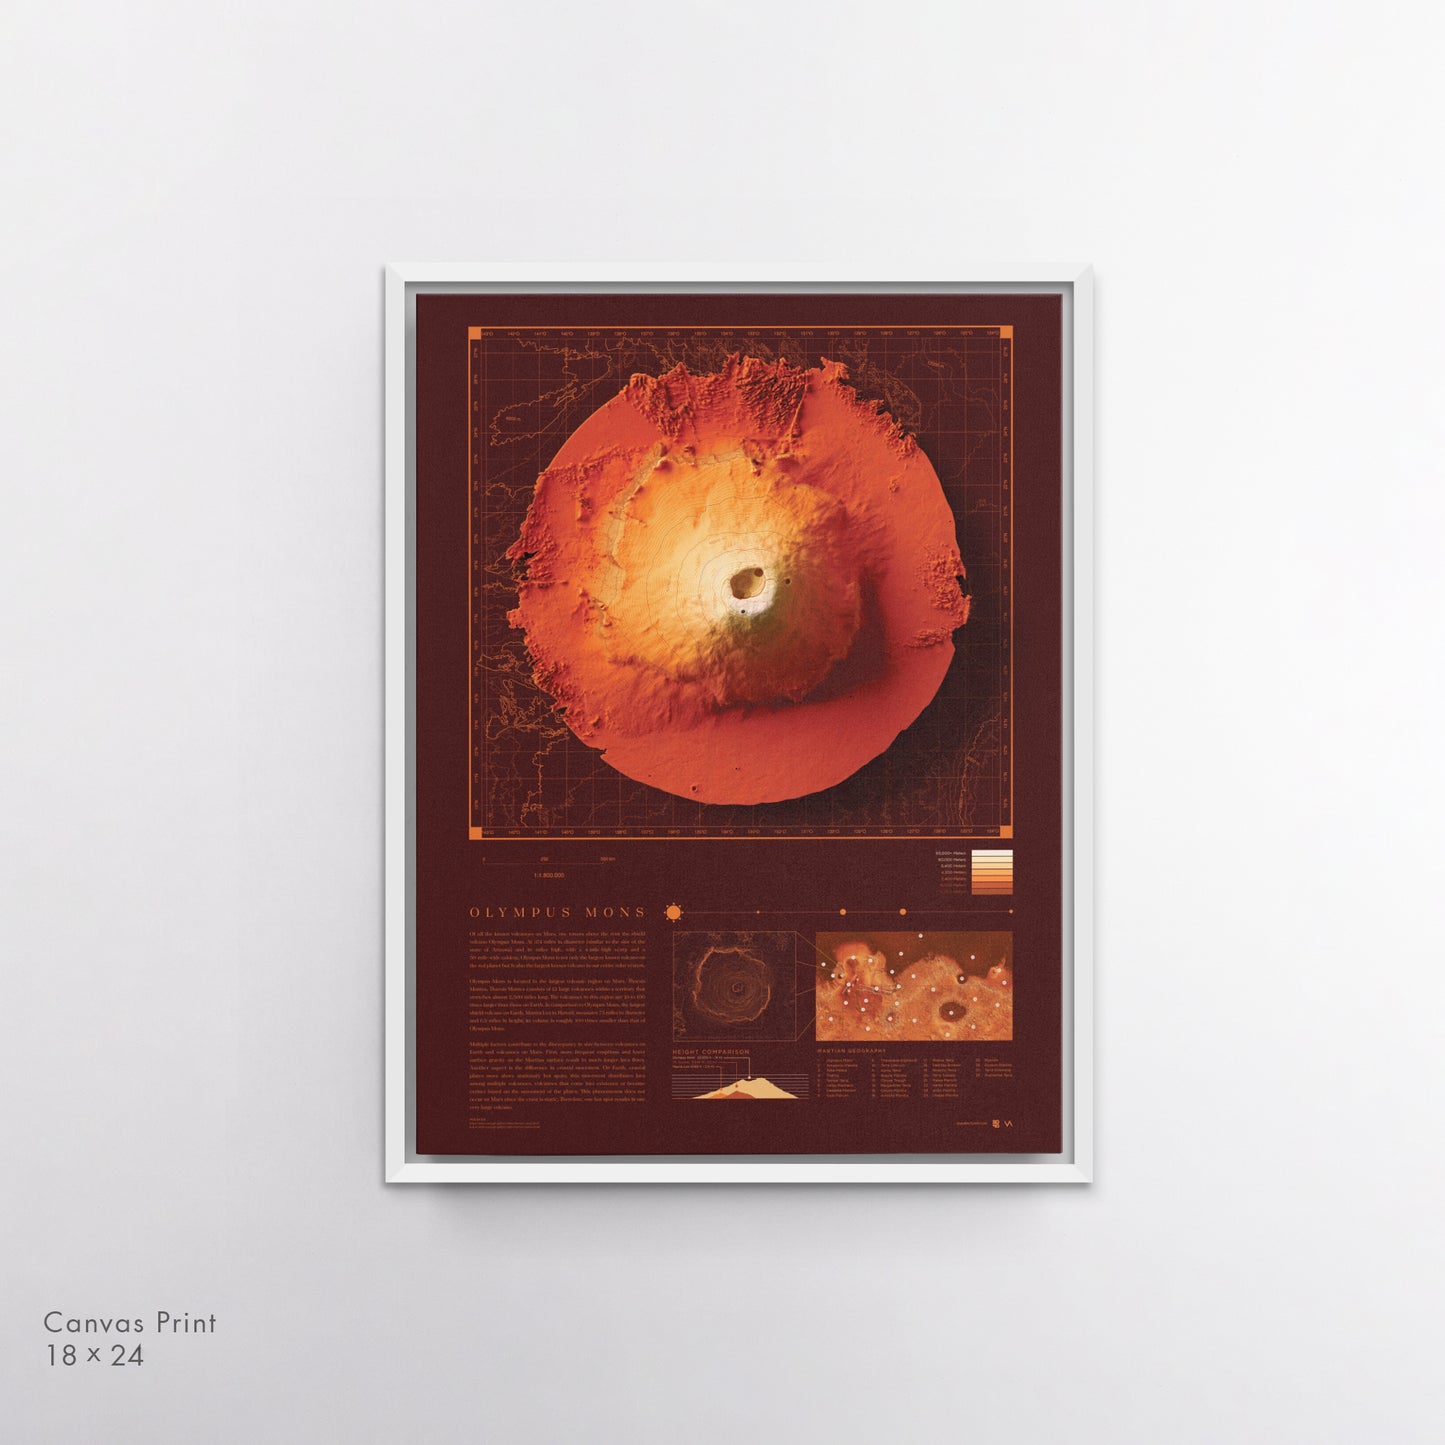 Olympus Mons - Red